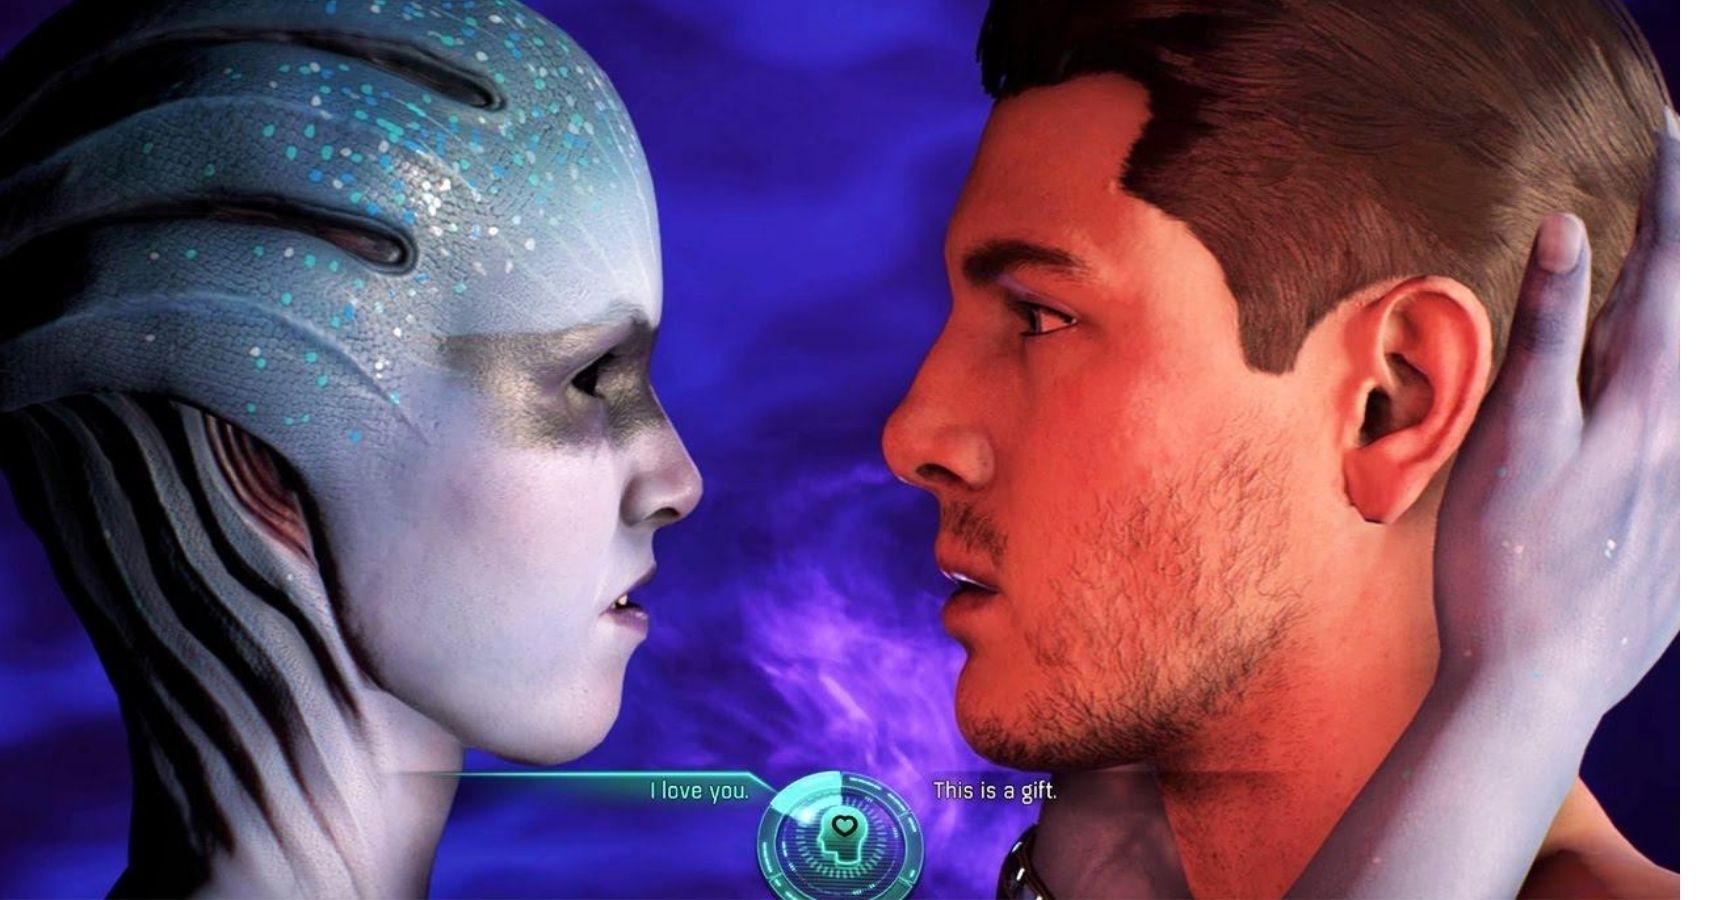 A blue alien woman and a human man lock eyes